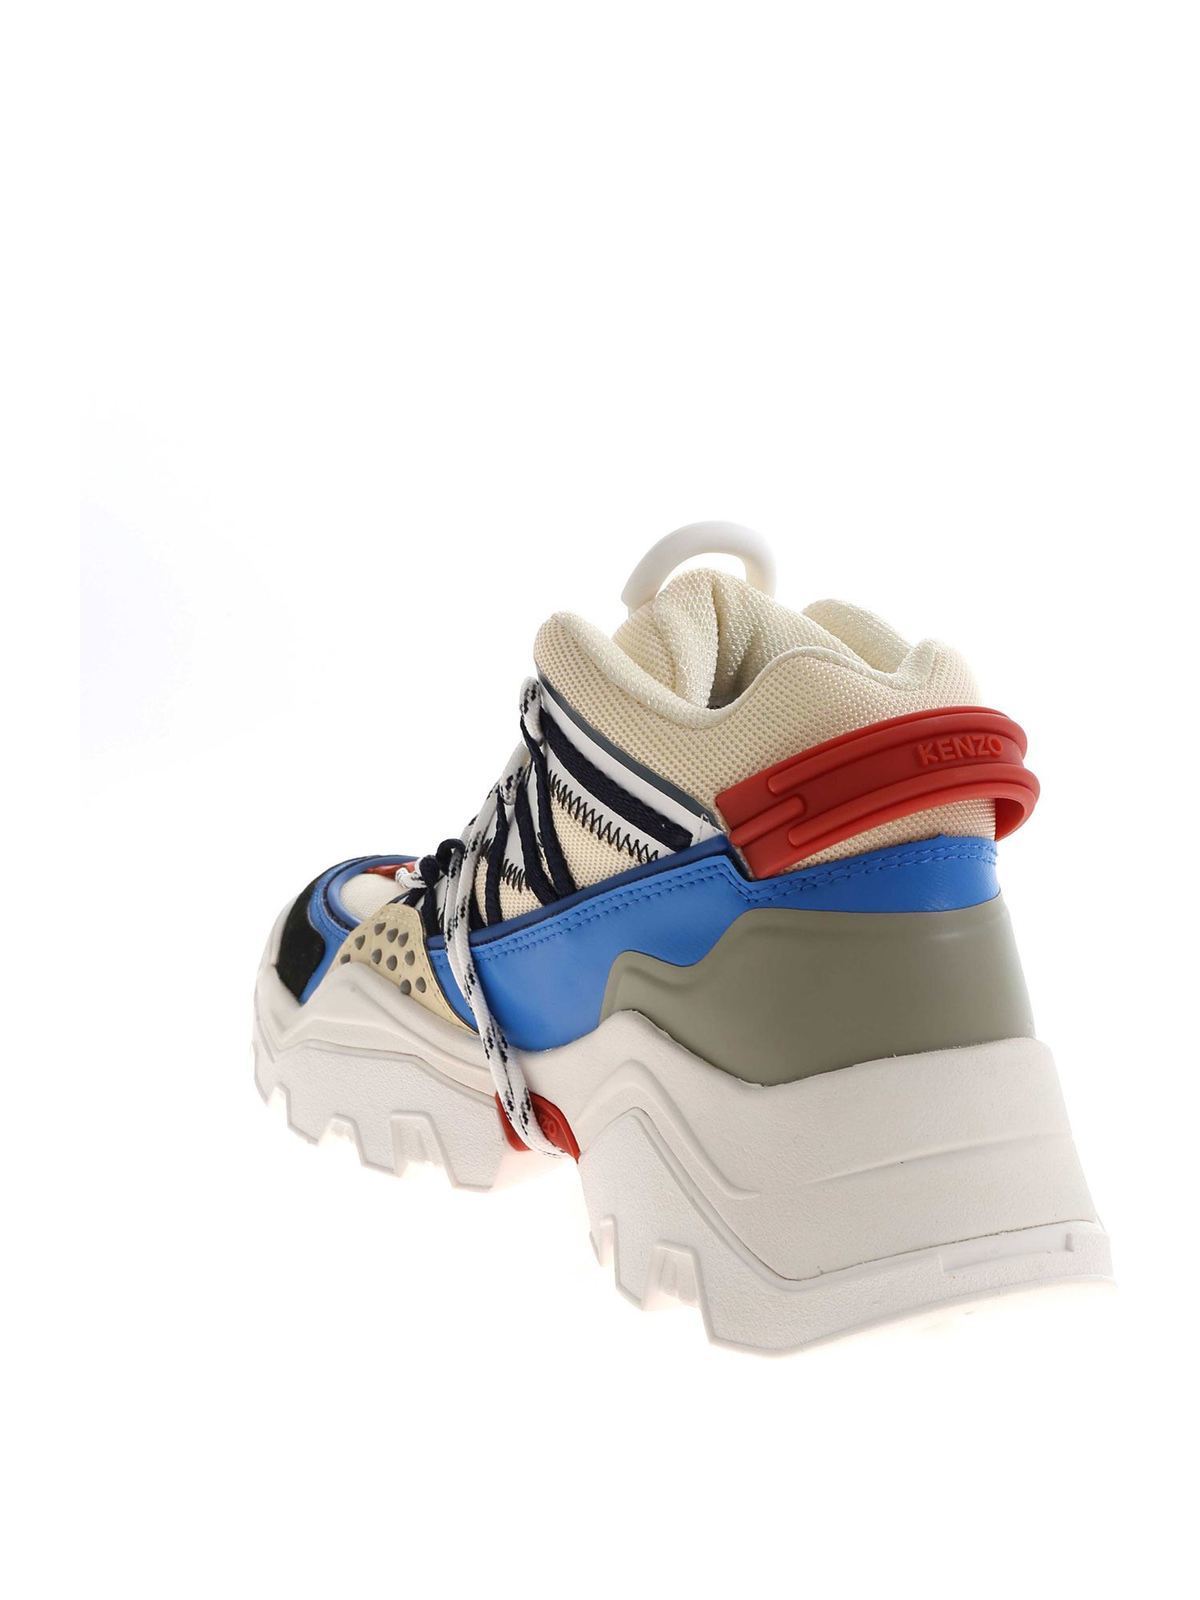 materiaal G opleiding Trainers Kenzo - Inka sneakers in cream color - FA62SN302F5704 | iKRIX.com